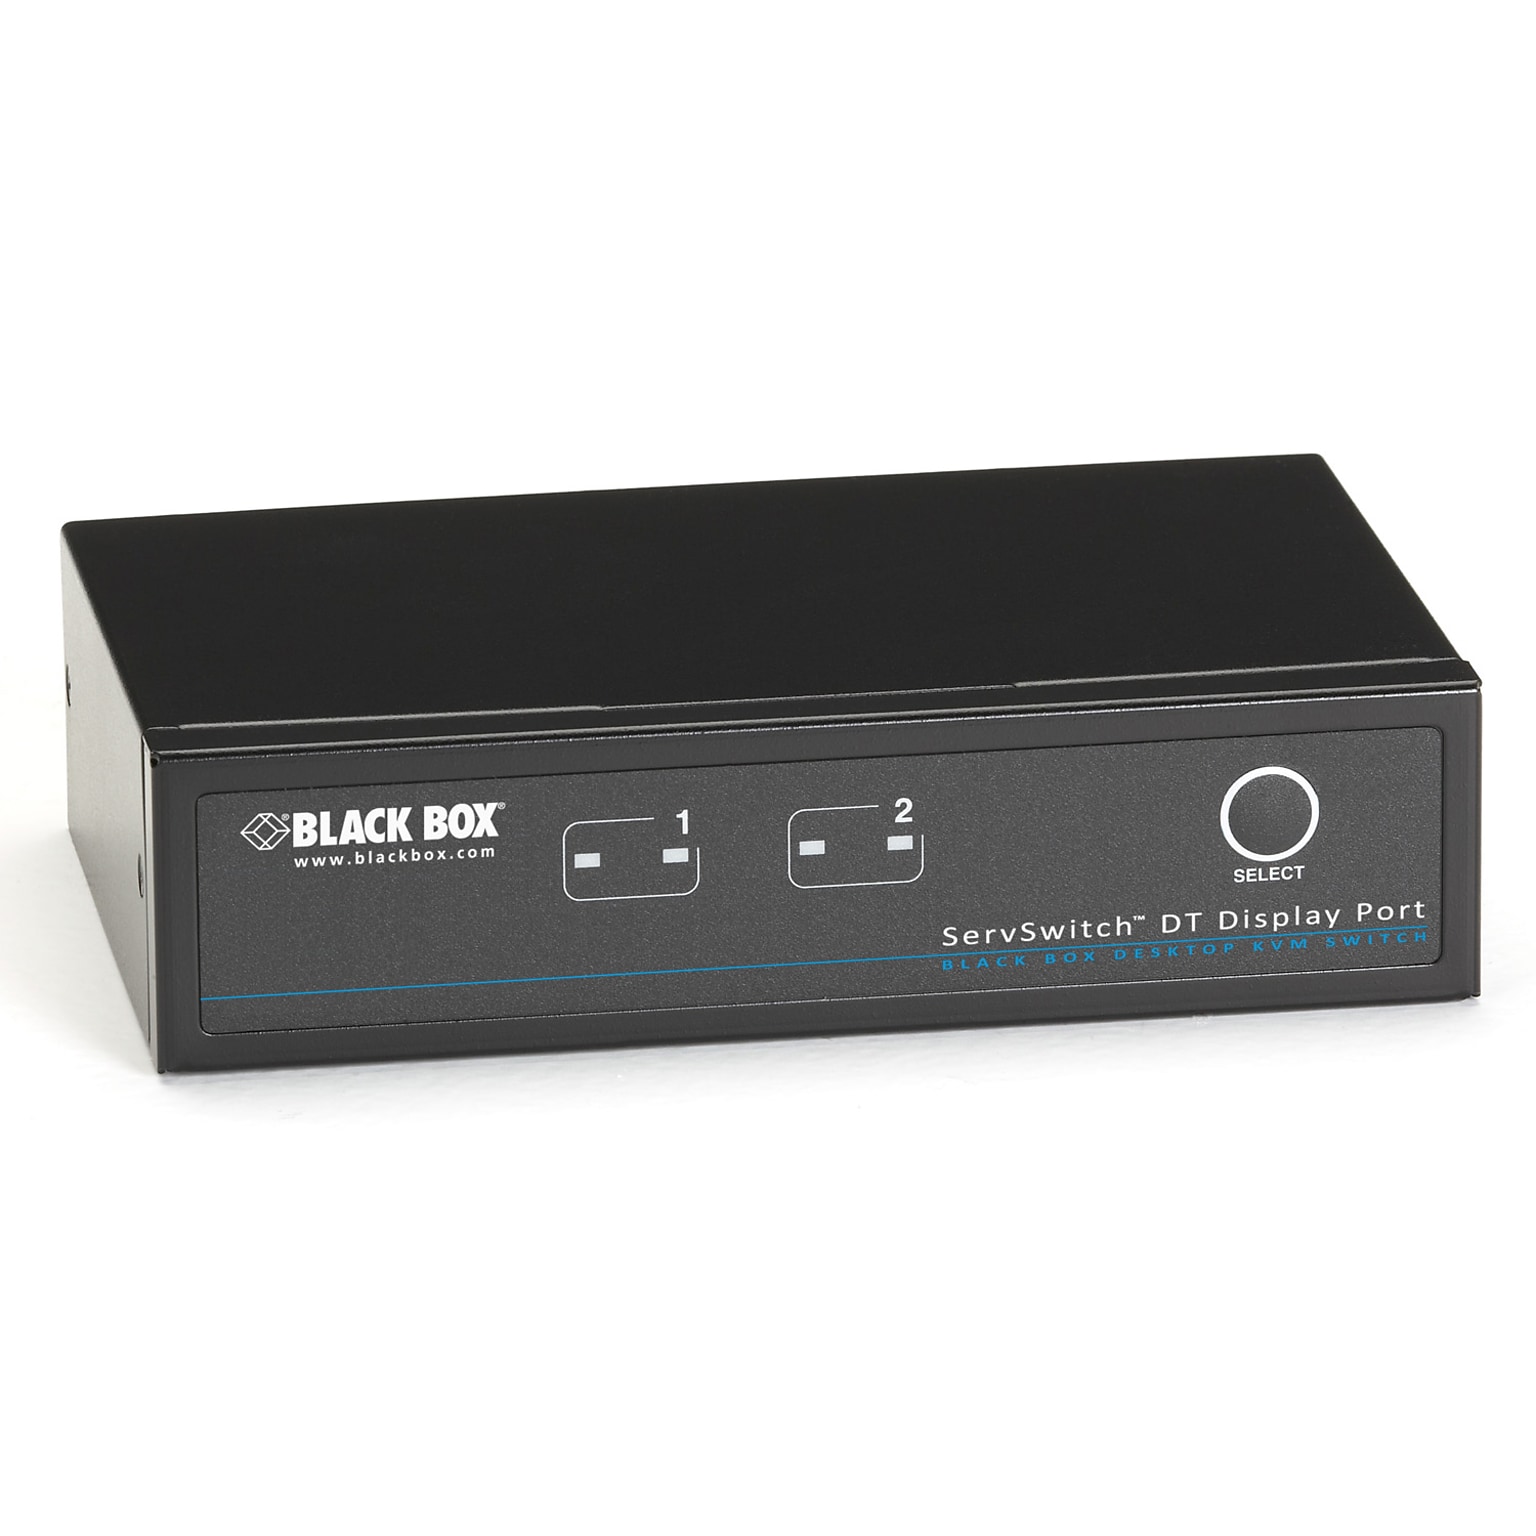 Black Box DT Series KVM Switch DT DisplayPort with USB and Audio - 2-Port (KV9702A)